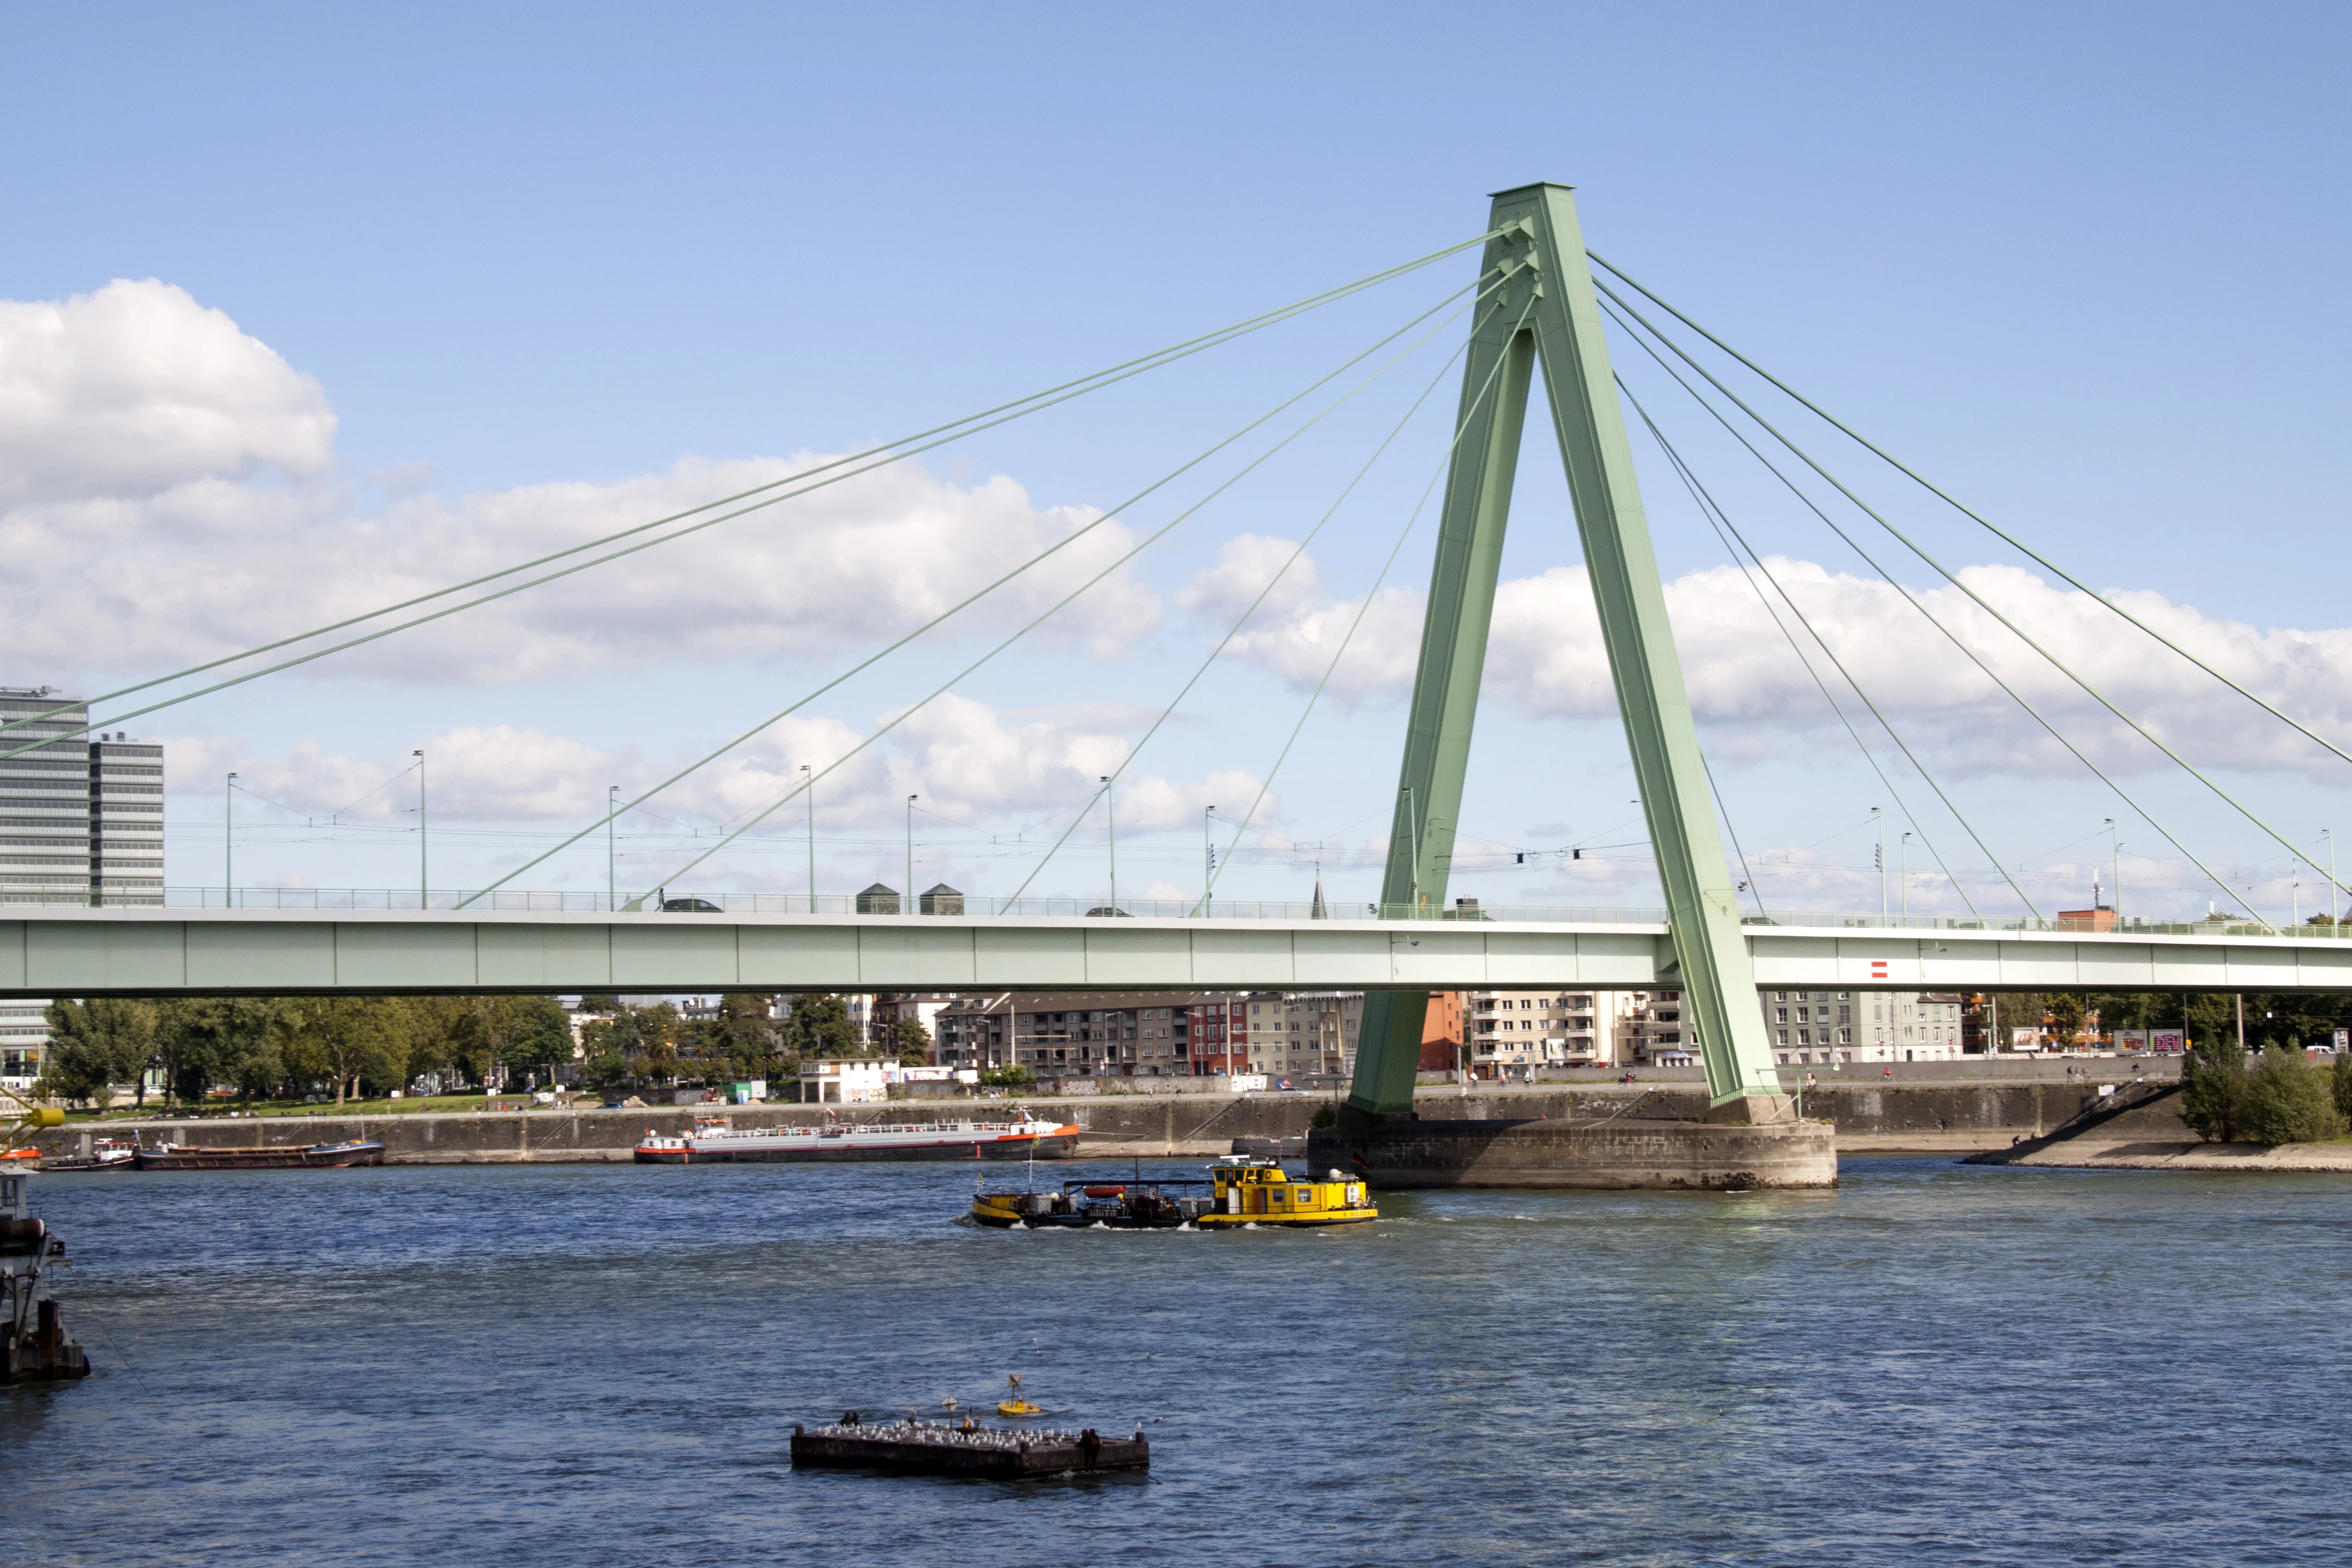 3. A-shape (Severinsbrücke bridge)